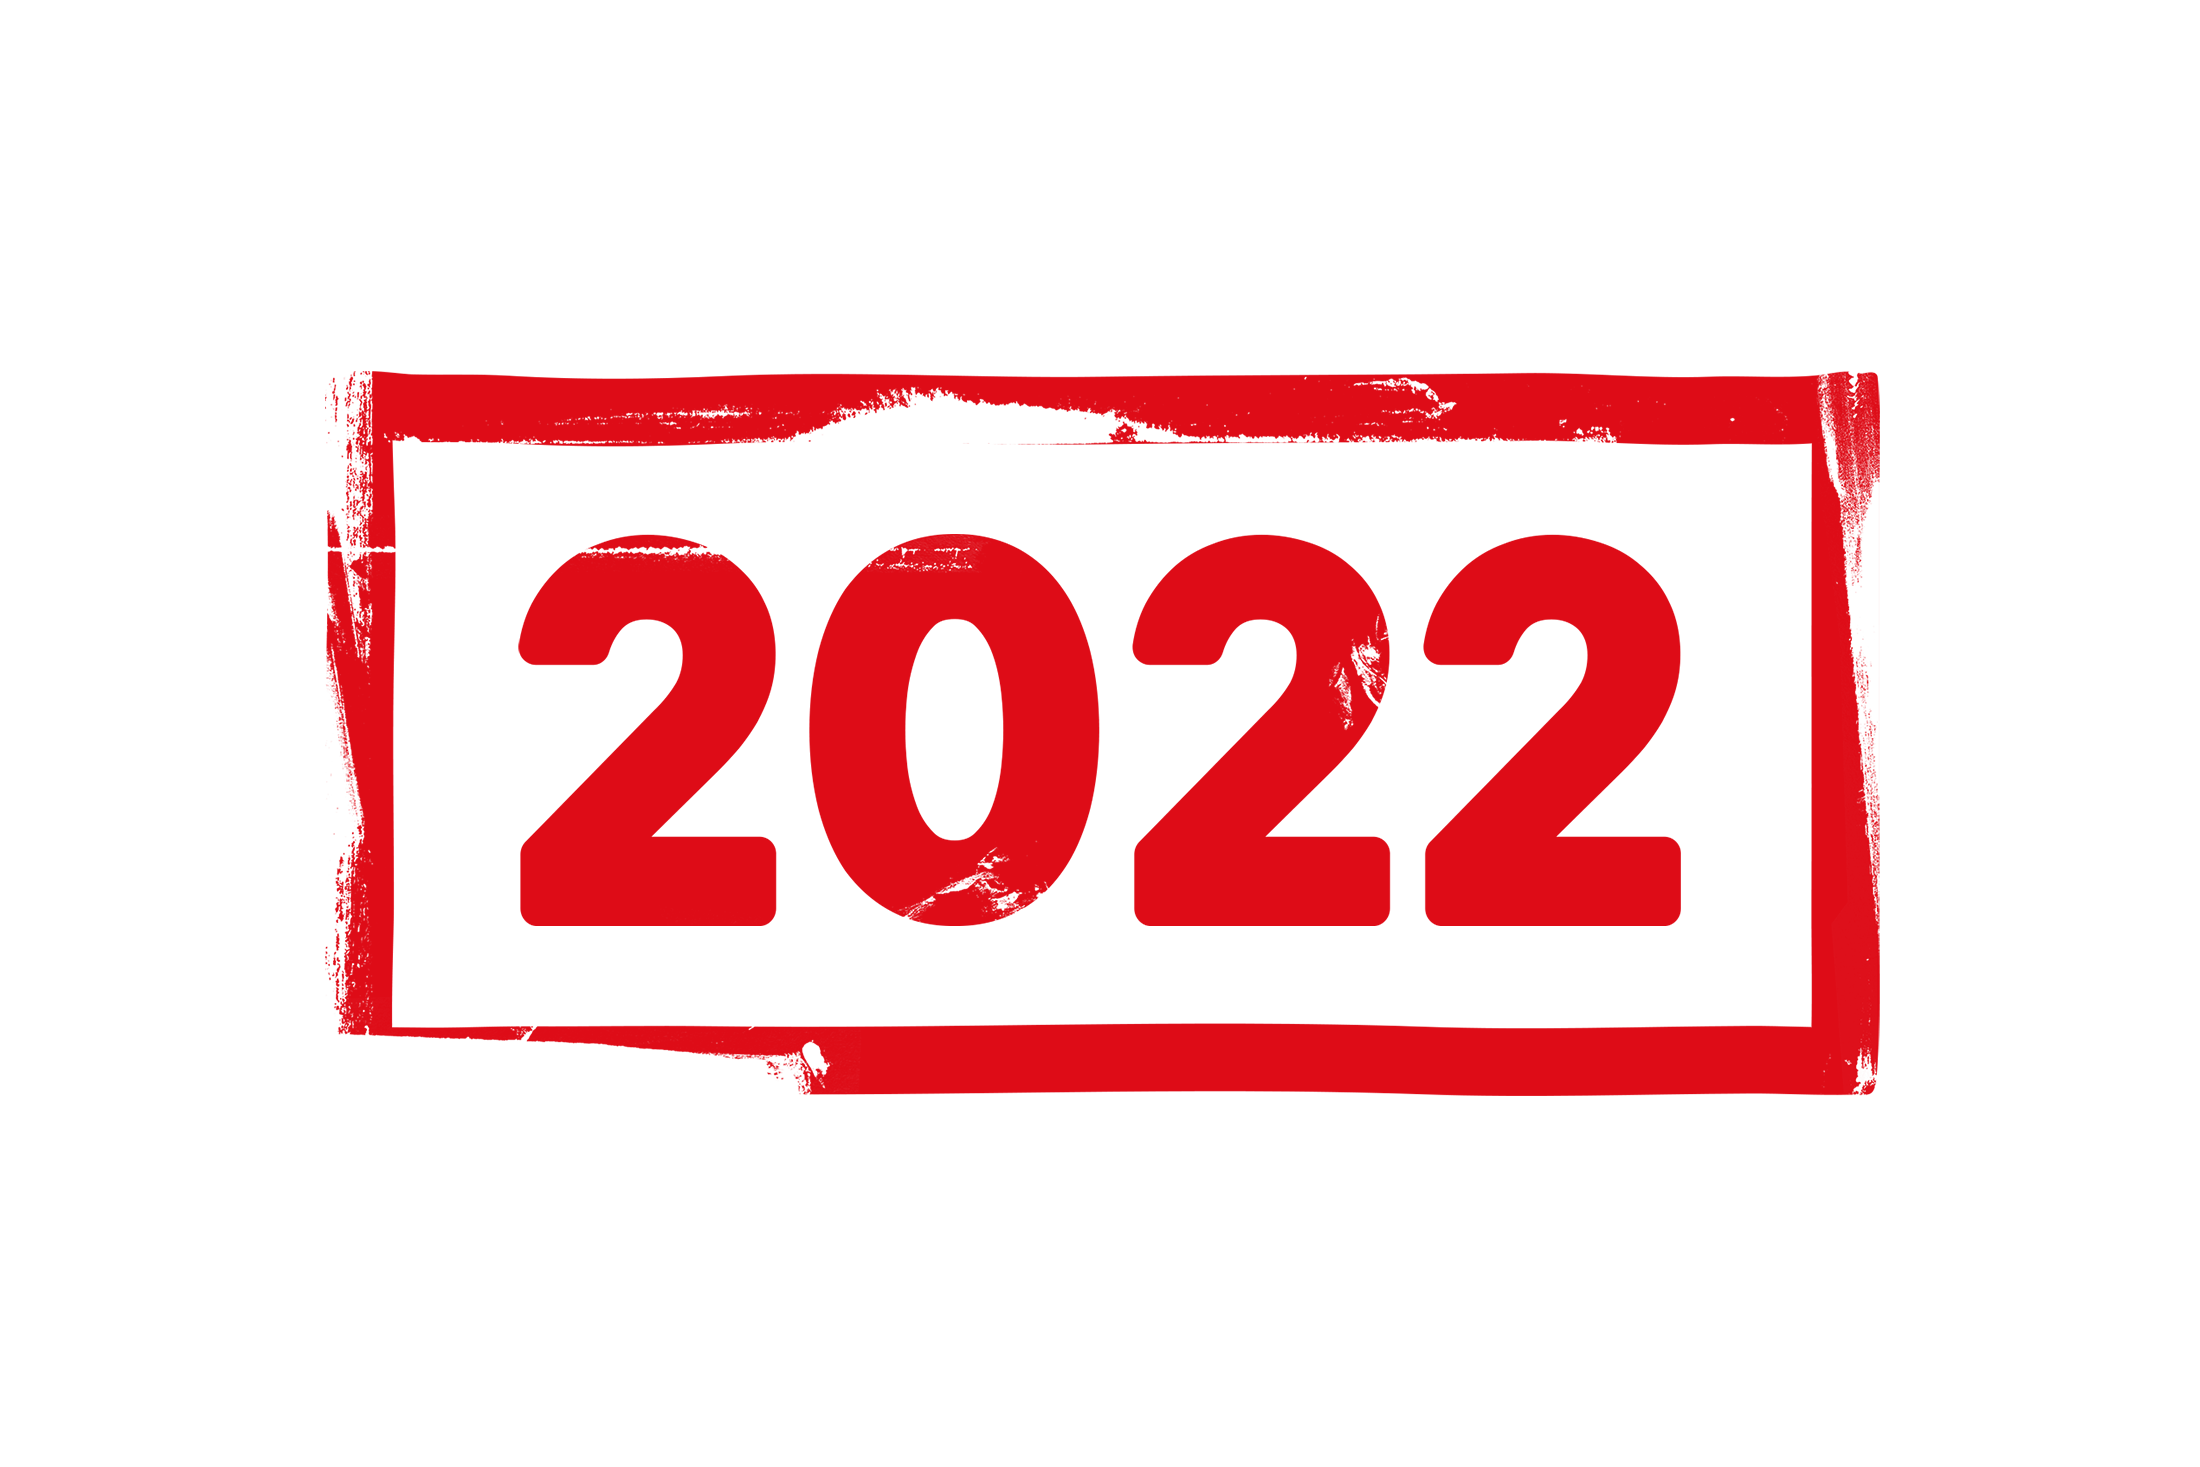 2022 stamp PSD